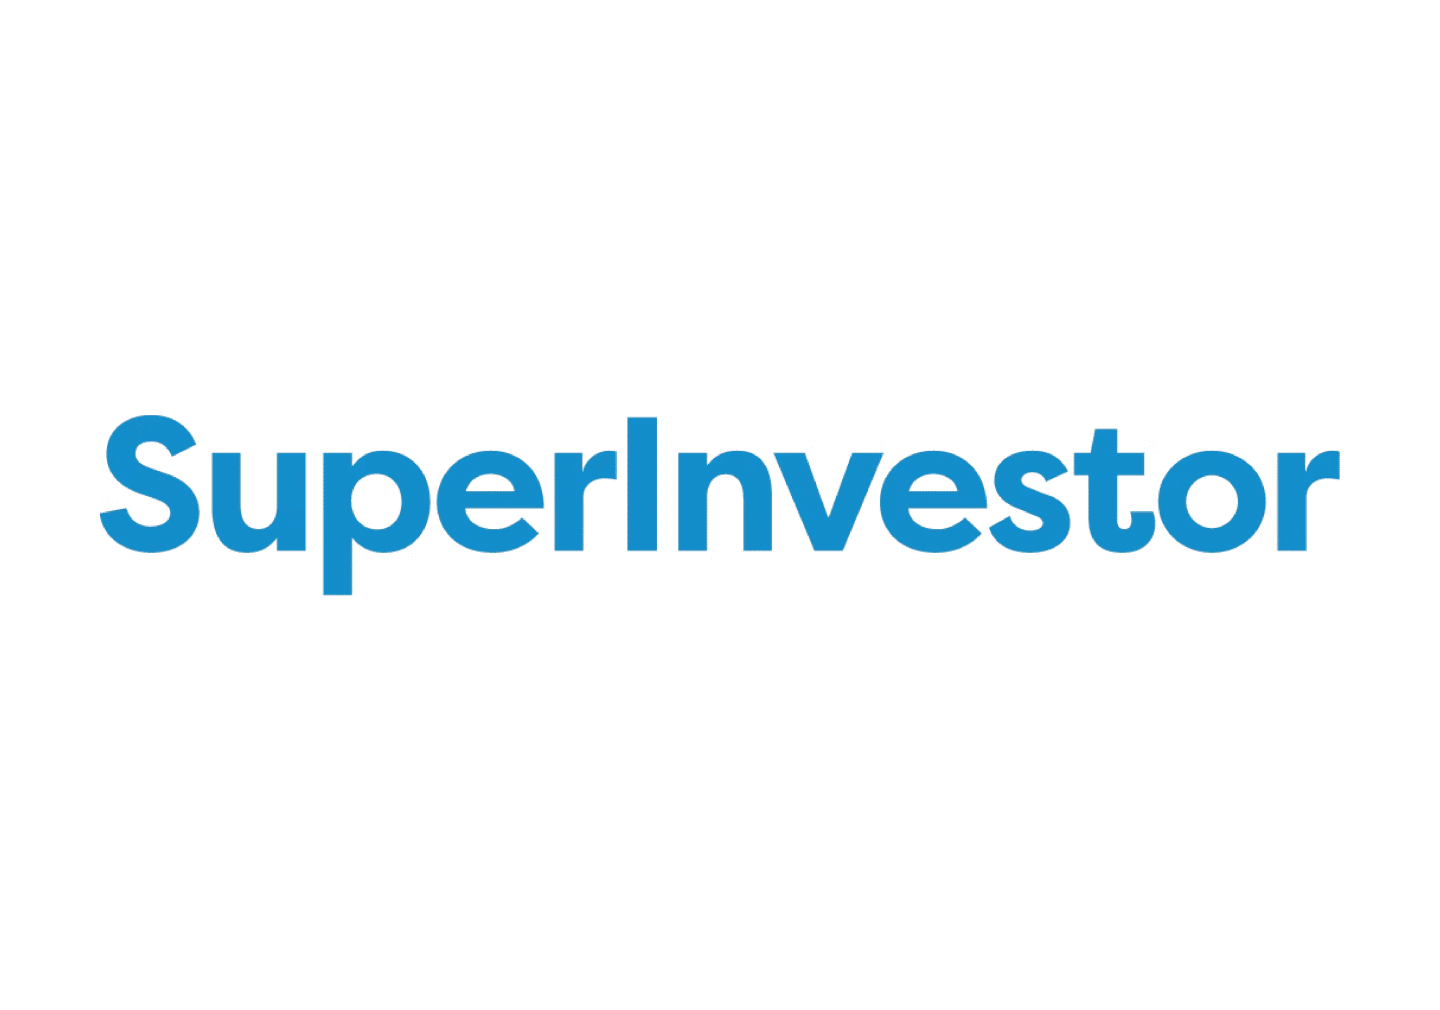 SuperInvestor logo white background